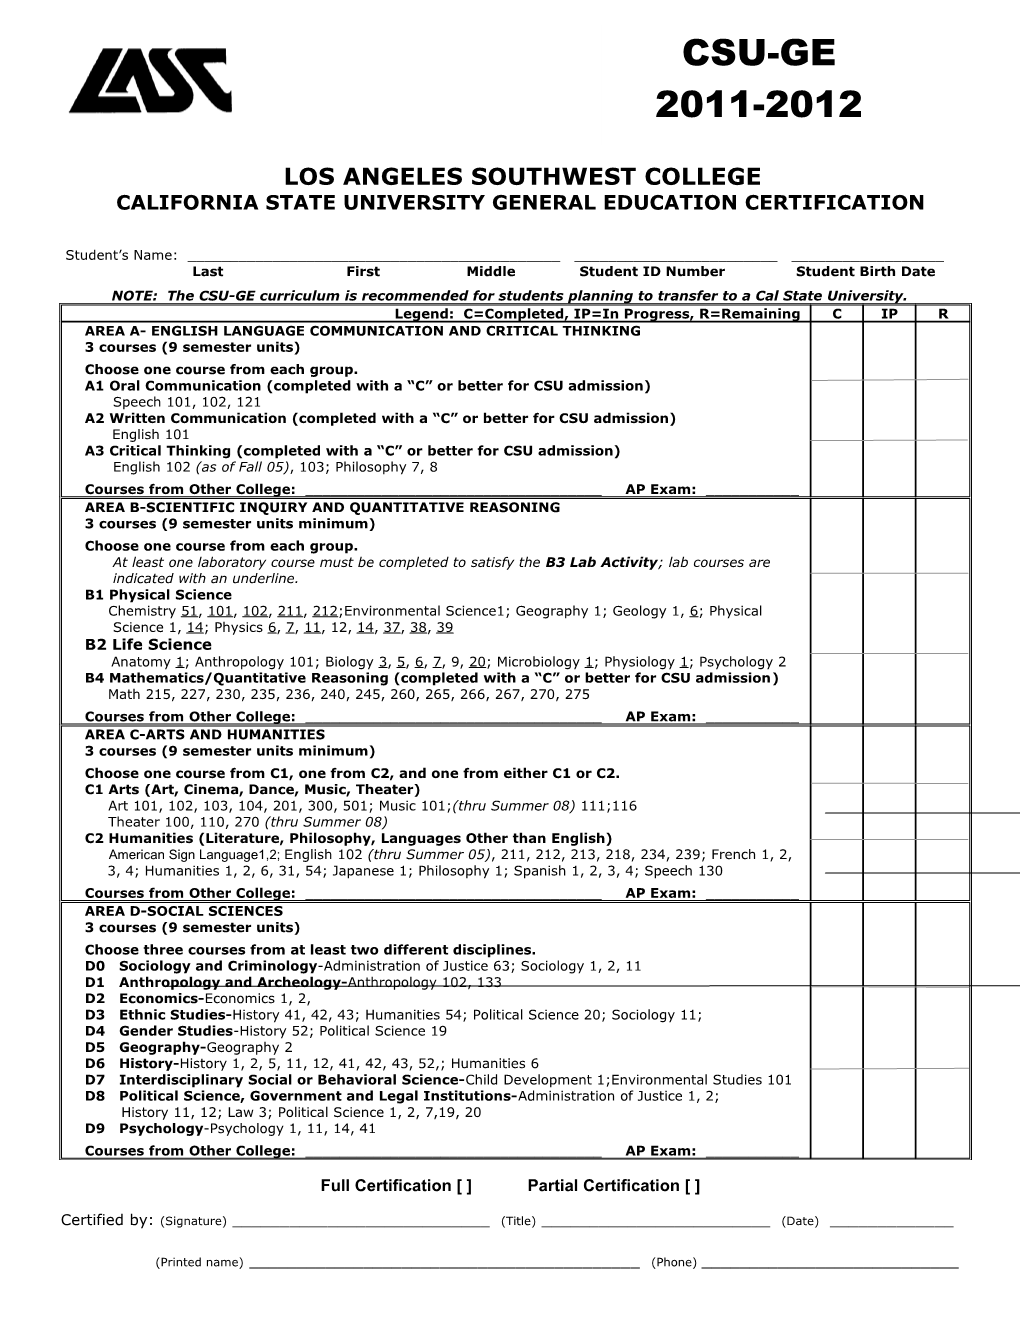 Californiastateuniversity General Education Certification